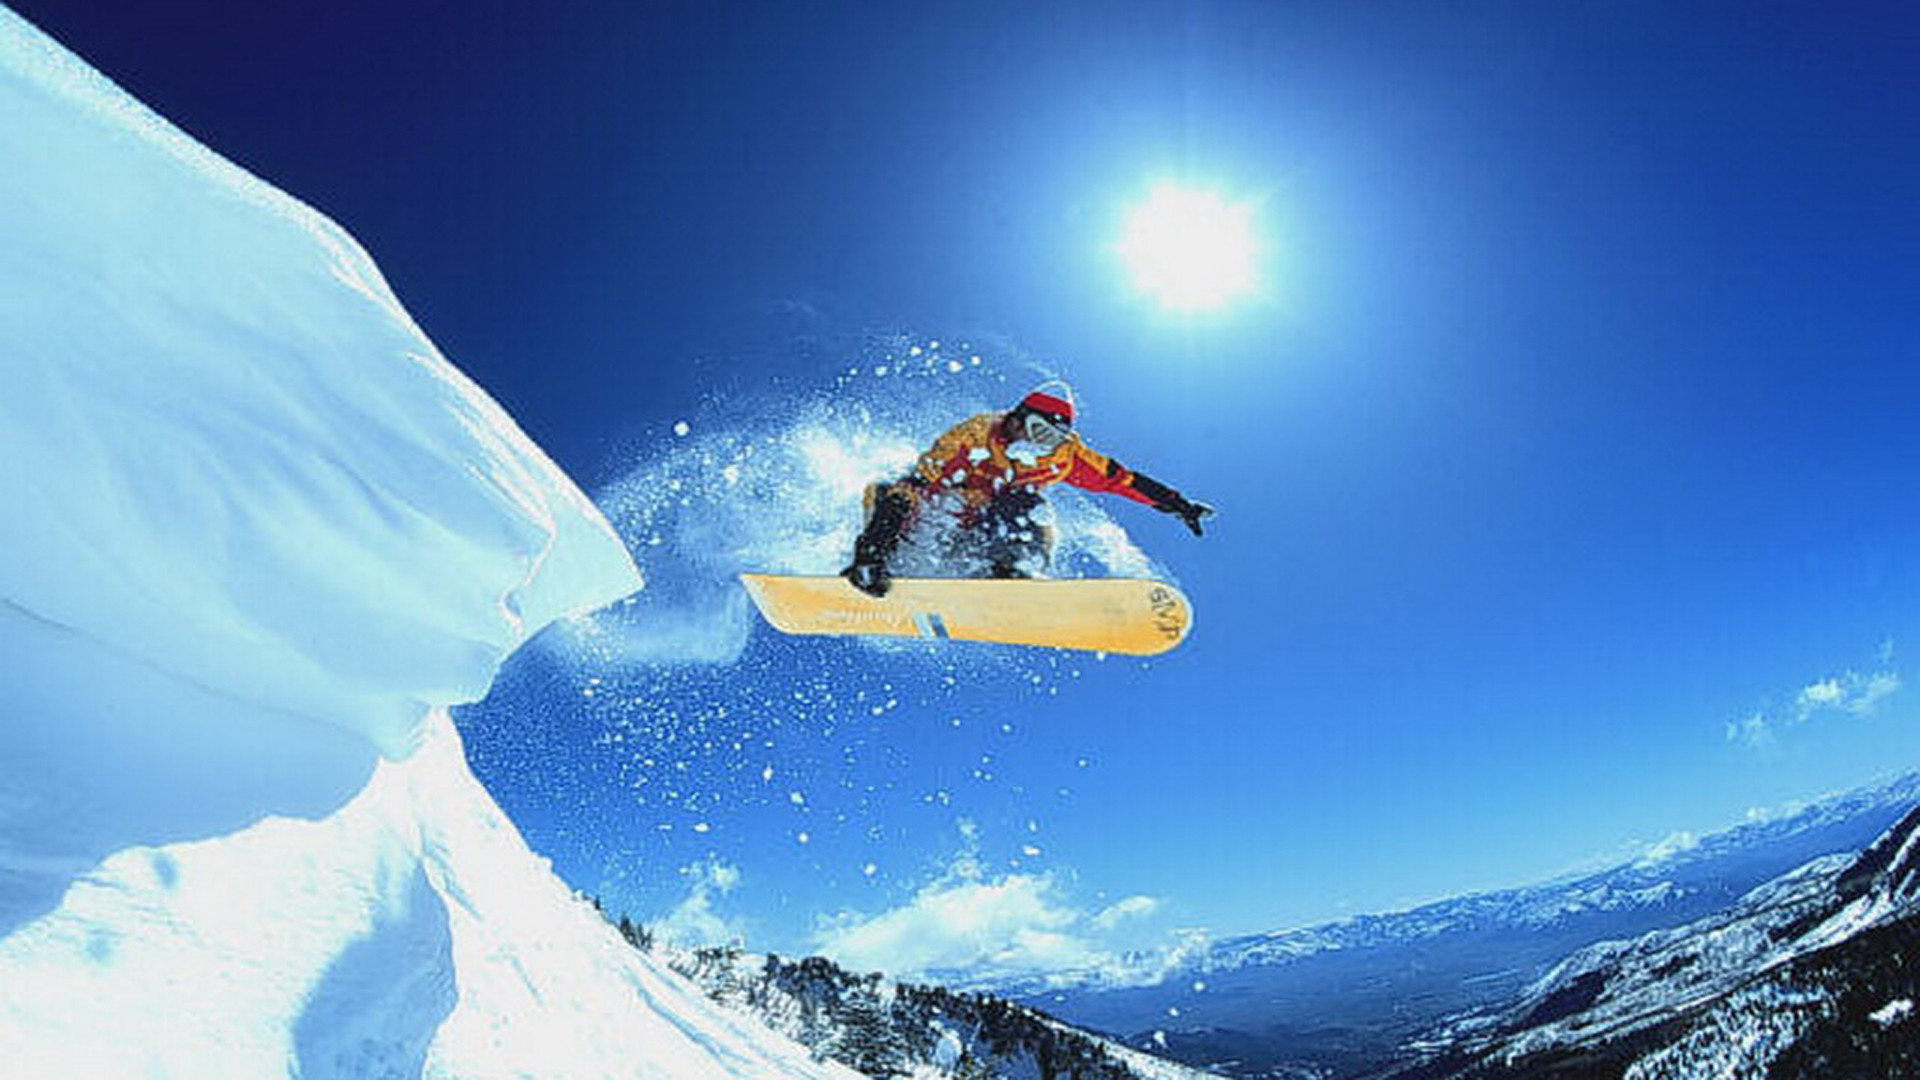 Sports Snowboarding 4k Ultra HD Wallpaper